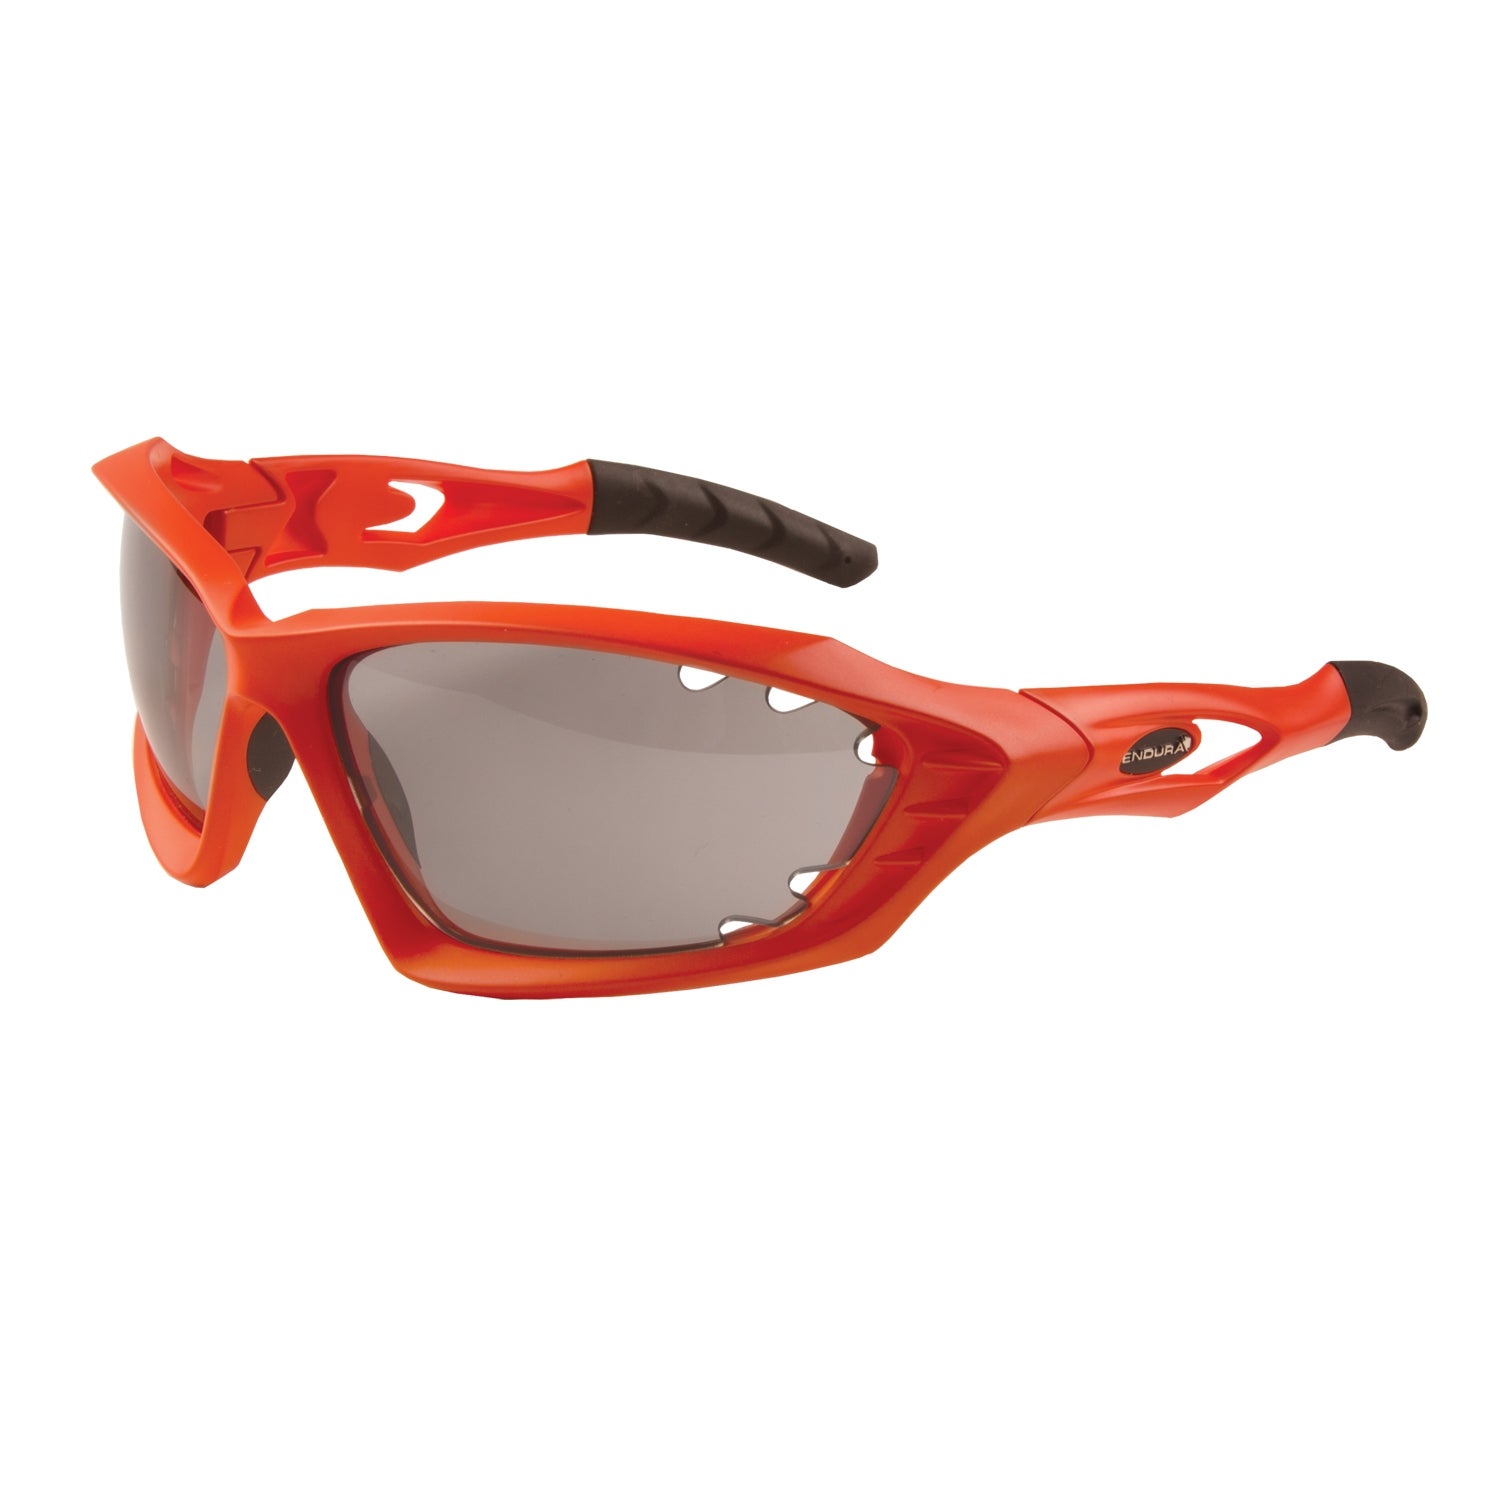 Men's Mullet Glasses - Orange - One Size